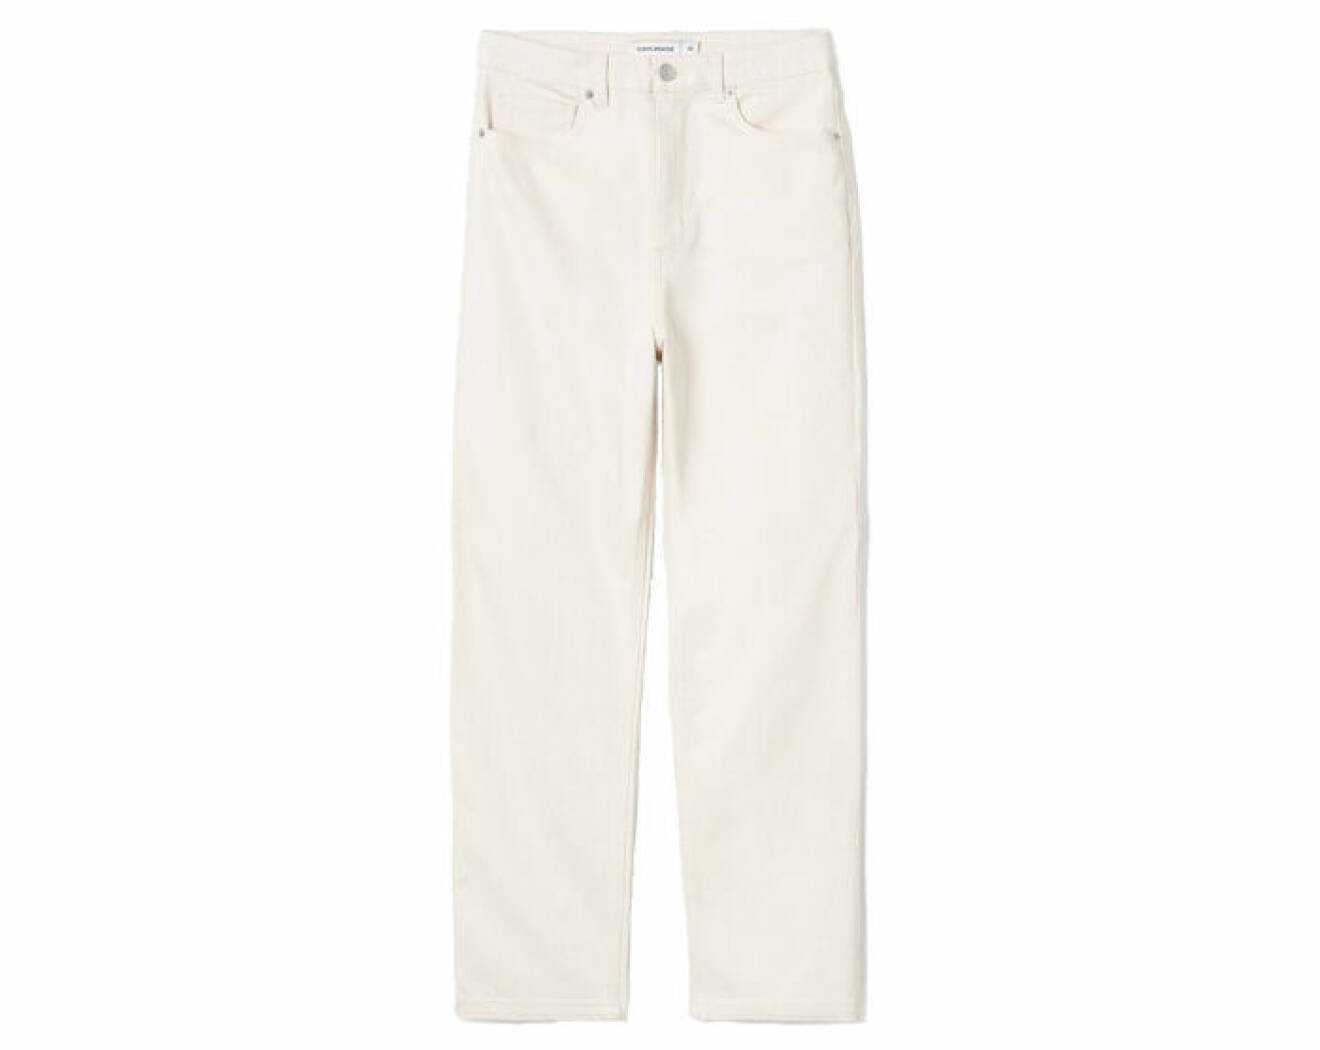 jeans smal passform och croppade byxben i vit nyans från CW by Carin Wester